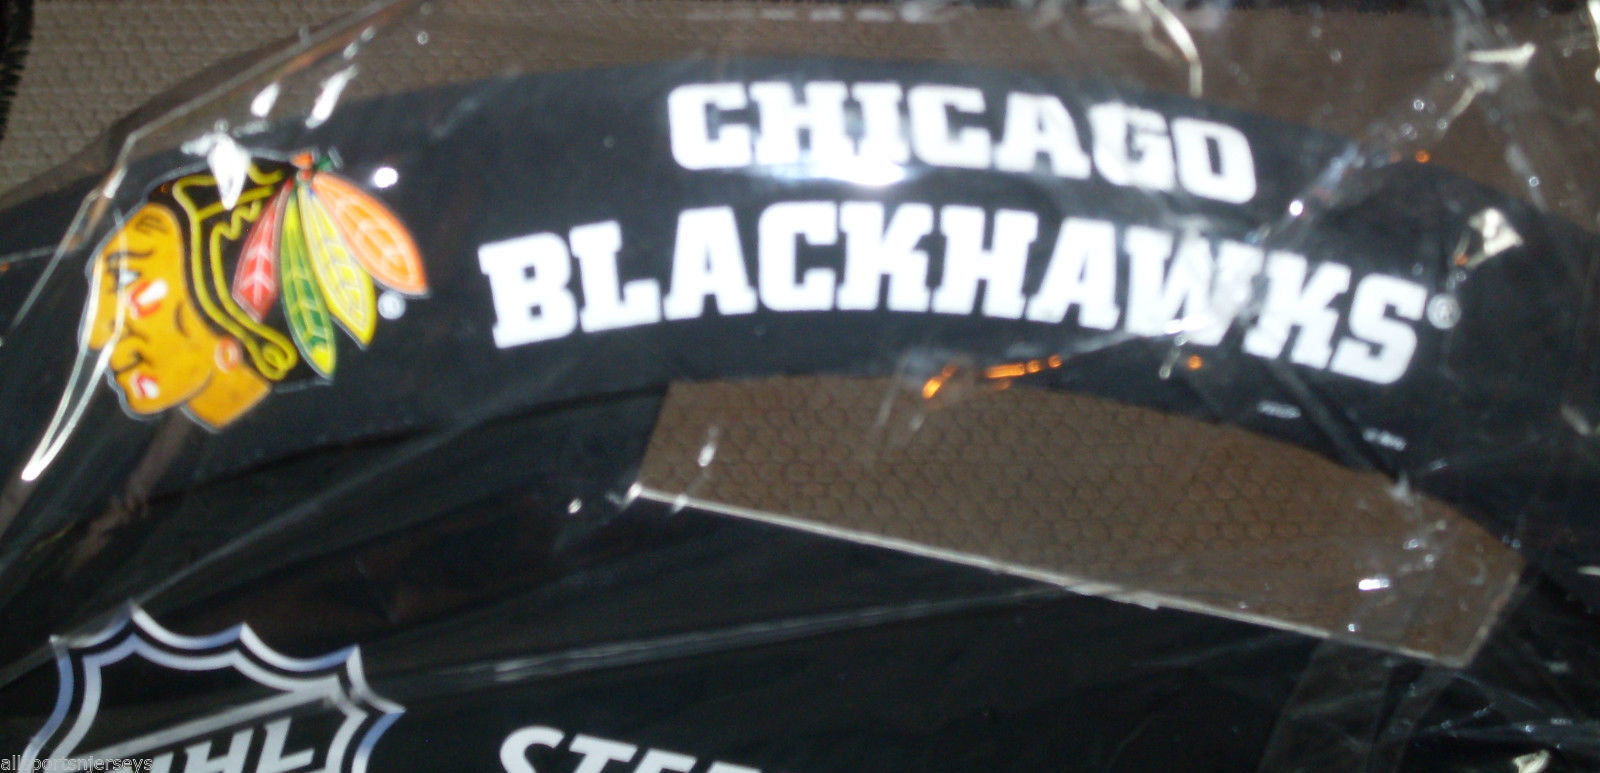 NHL Chicago Blackhawks Mesh Steering Wheel Cover by Fremont Die - $19.99